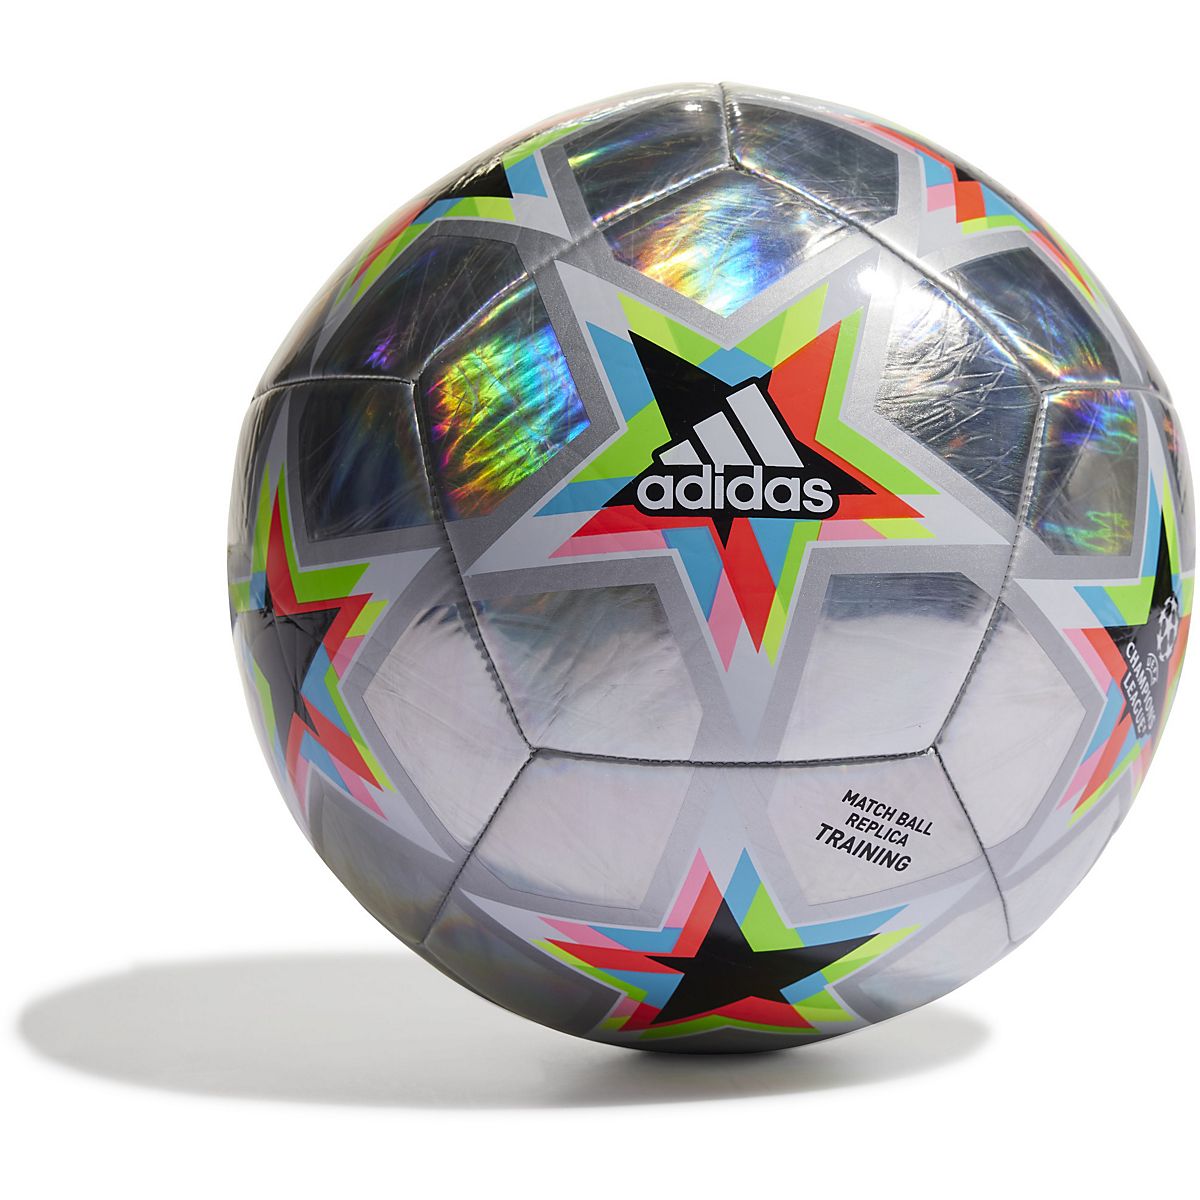 UEFA Champions League Soccer Ball | Academy